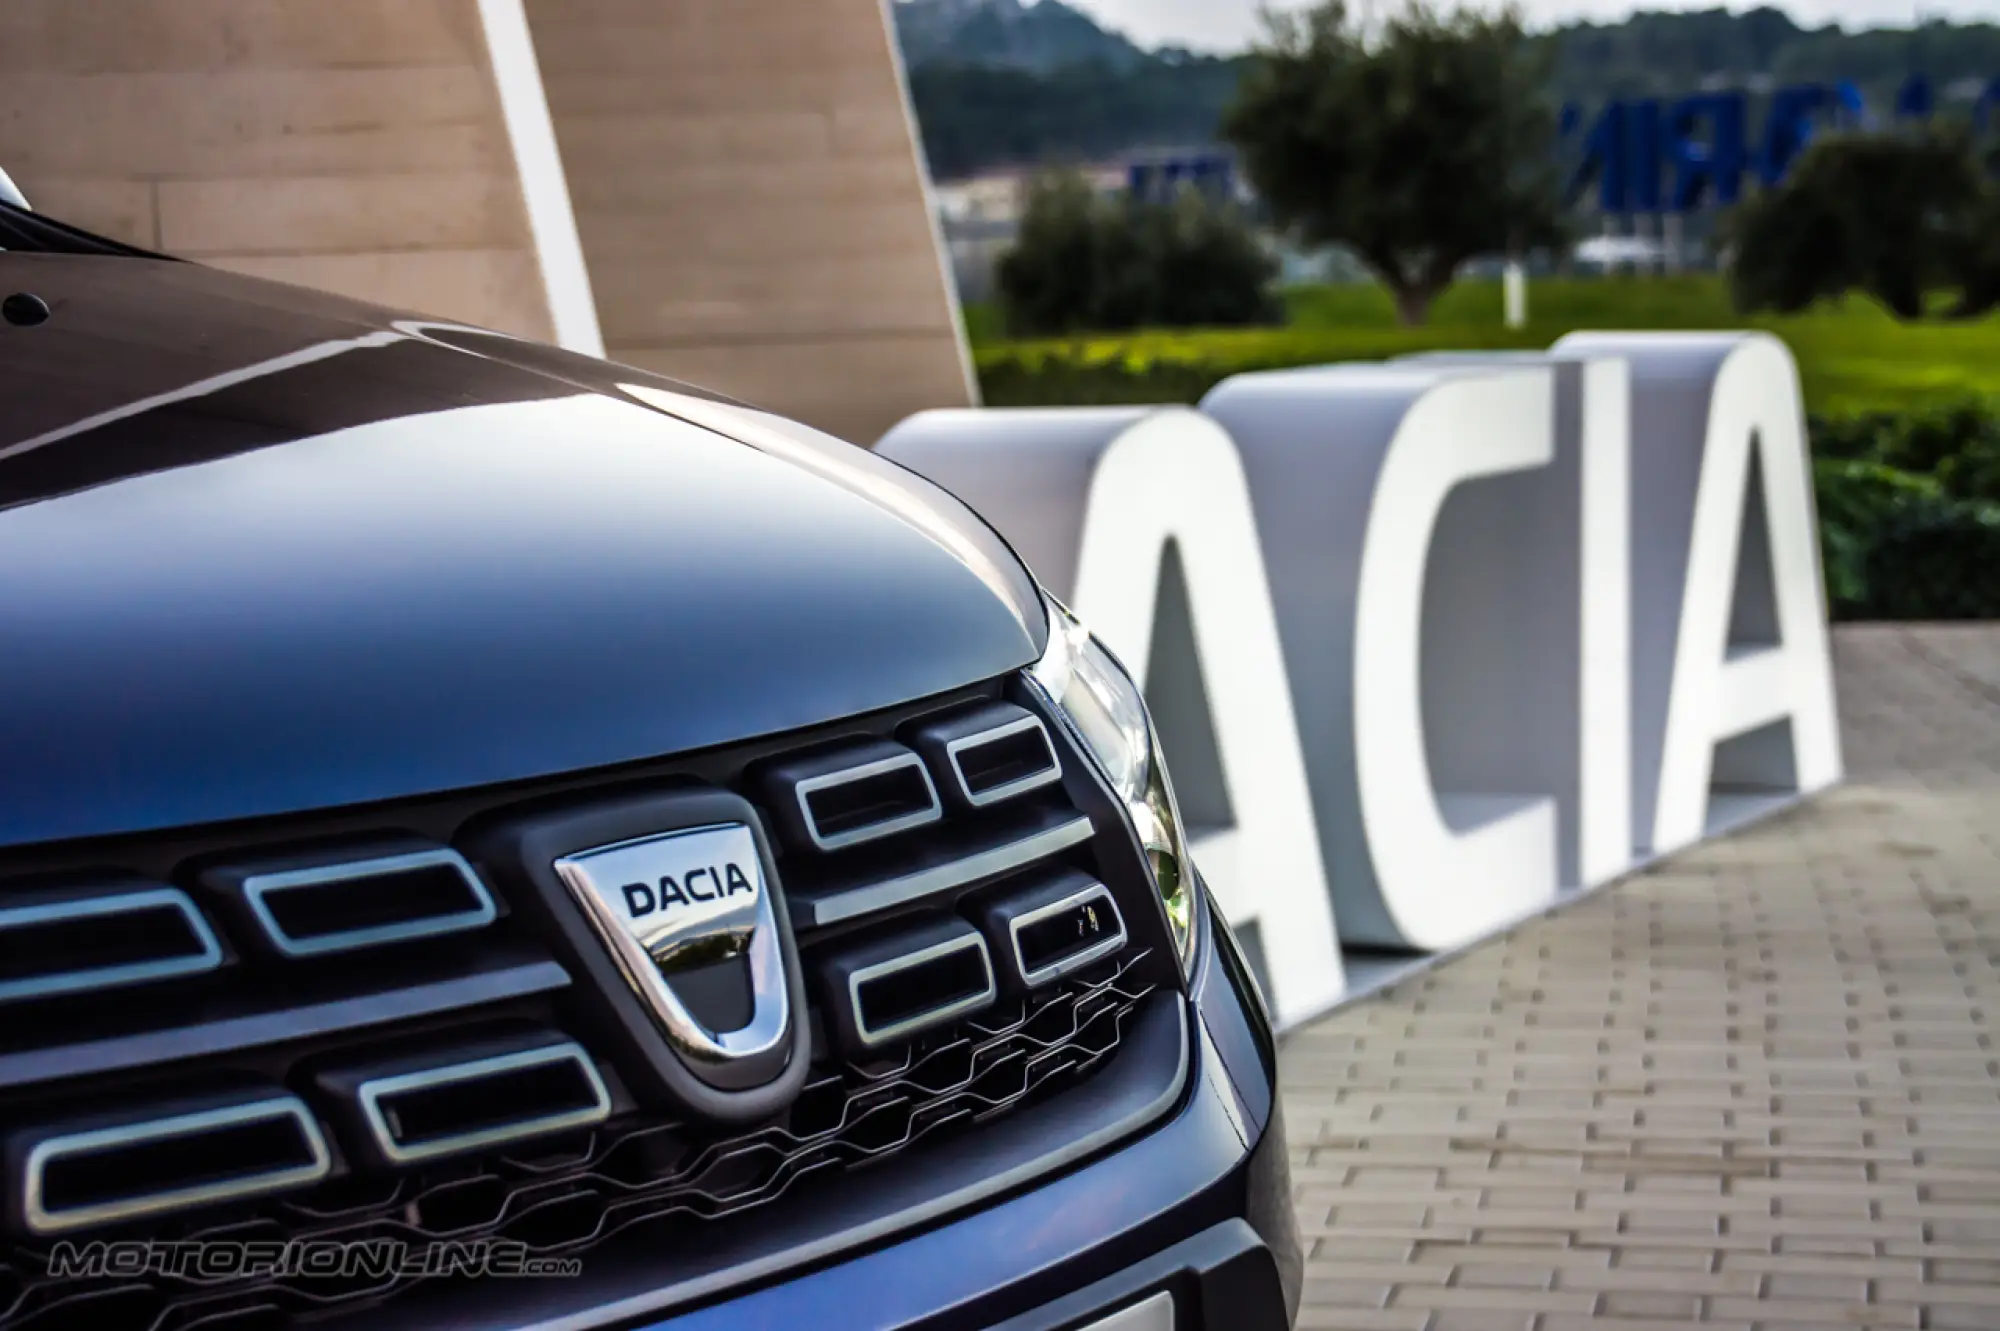 Nuova Gamma Dacia 2017 - Anteprima Test Drive - 14